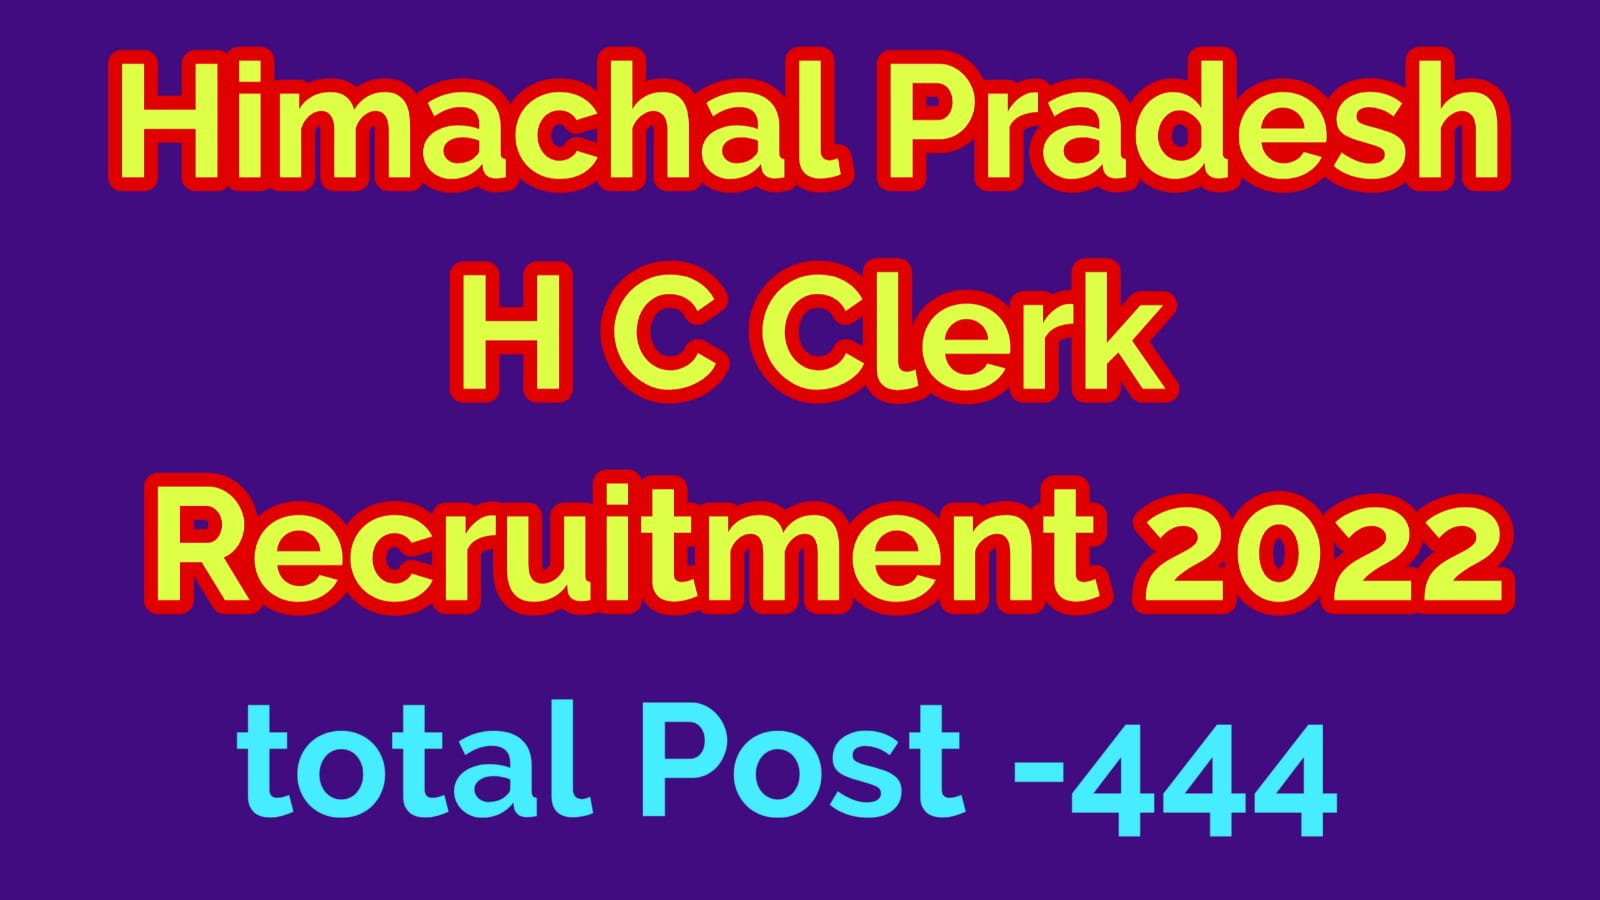 Himachal Pradesh H C Clerk Recruitment 2022